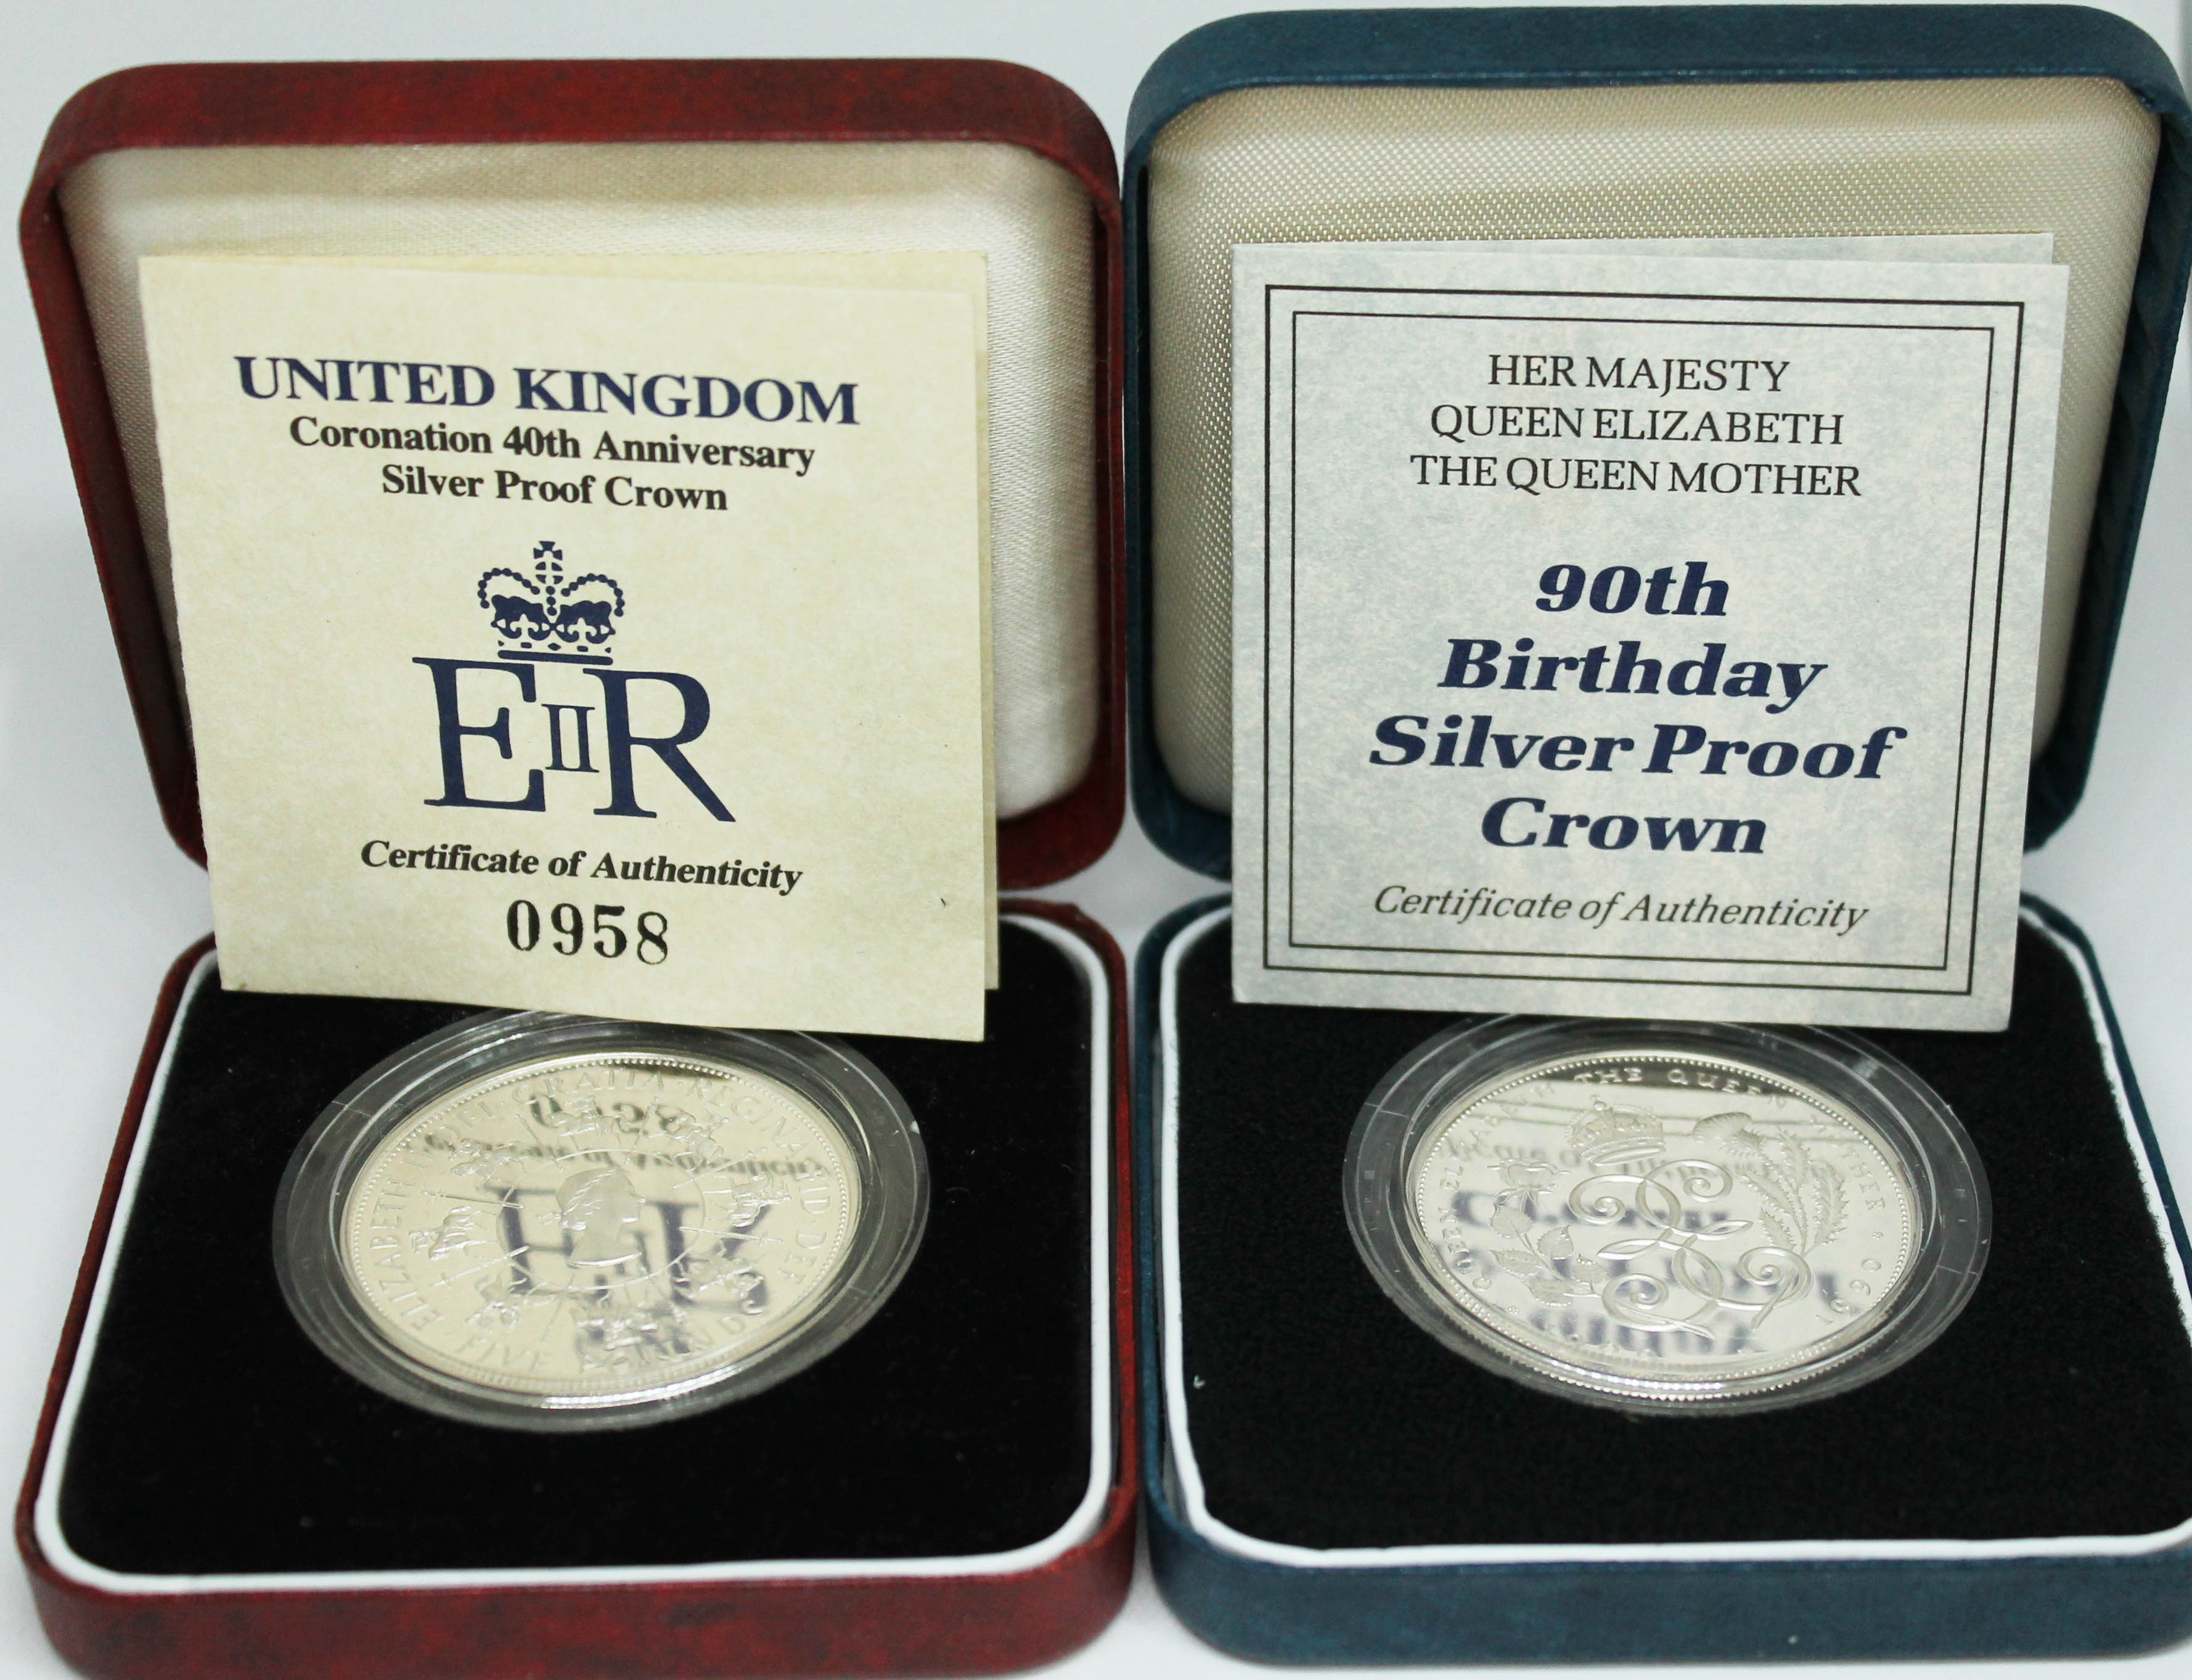 Royal Mint, United Kingdom Coronation 40th Anniversary Silver Proof Crown, 1953-1993, Elizabeth